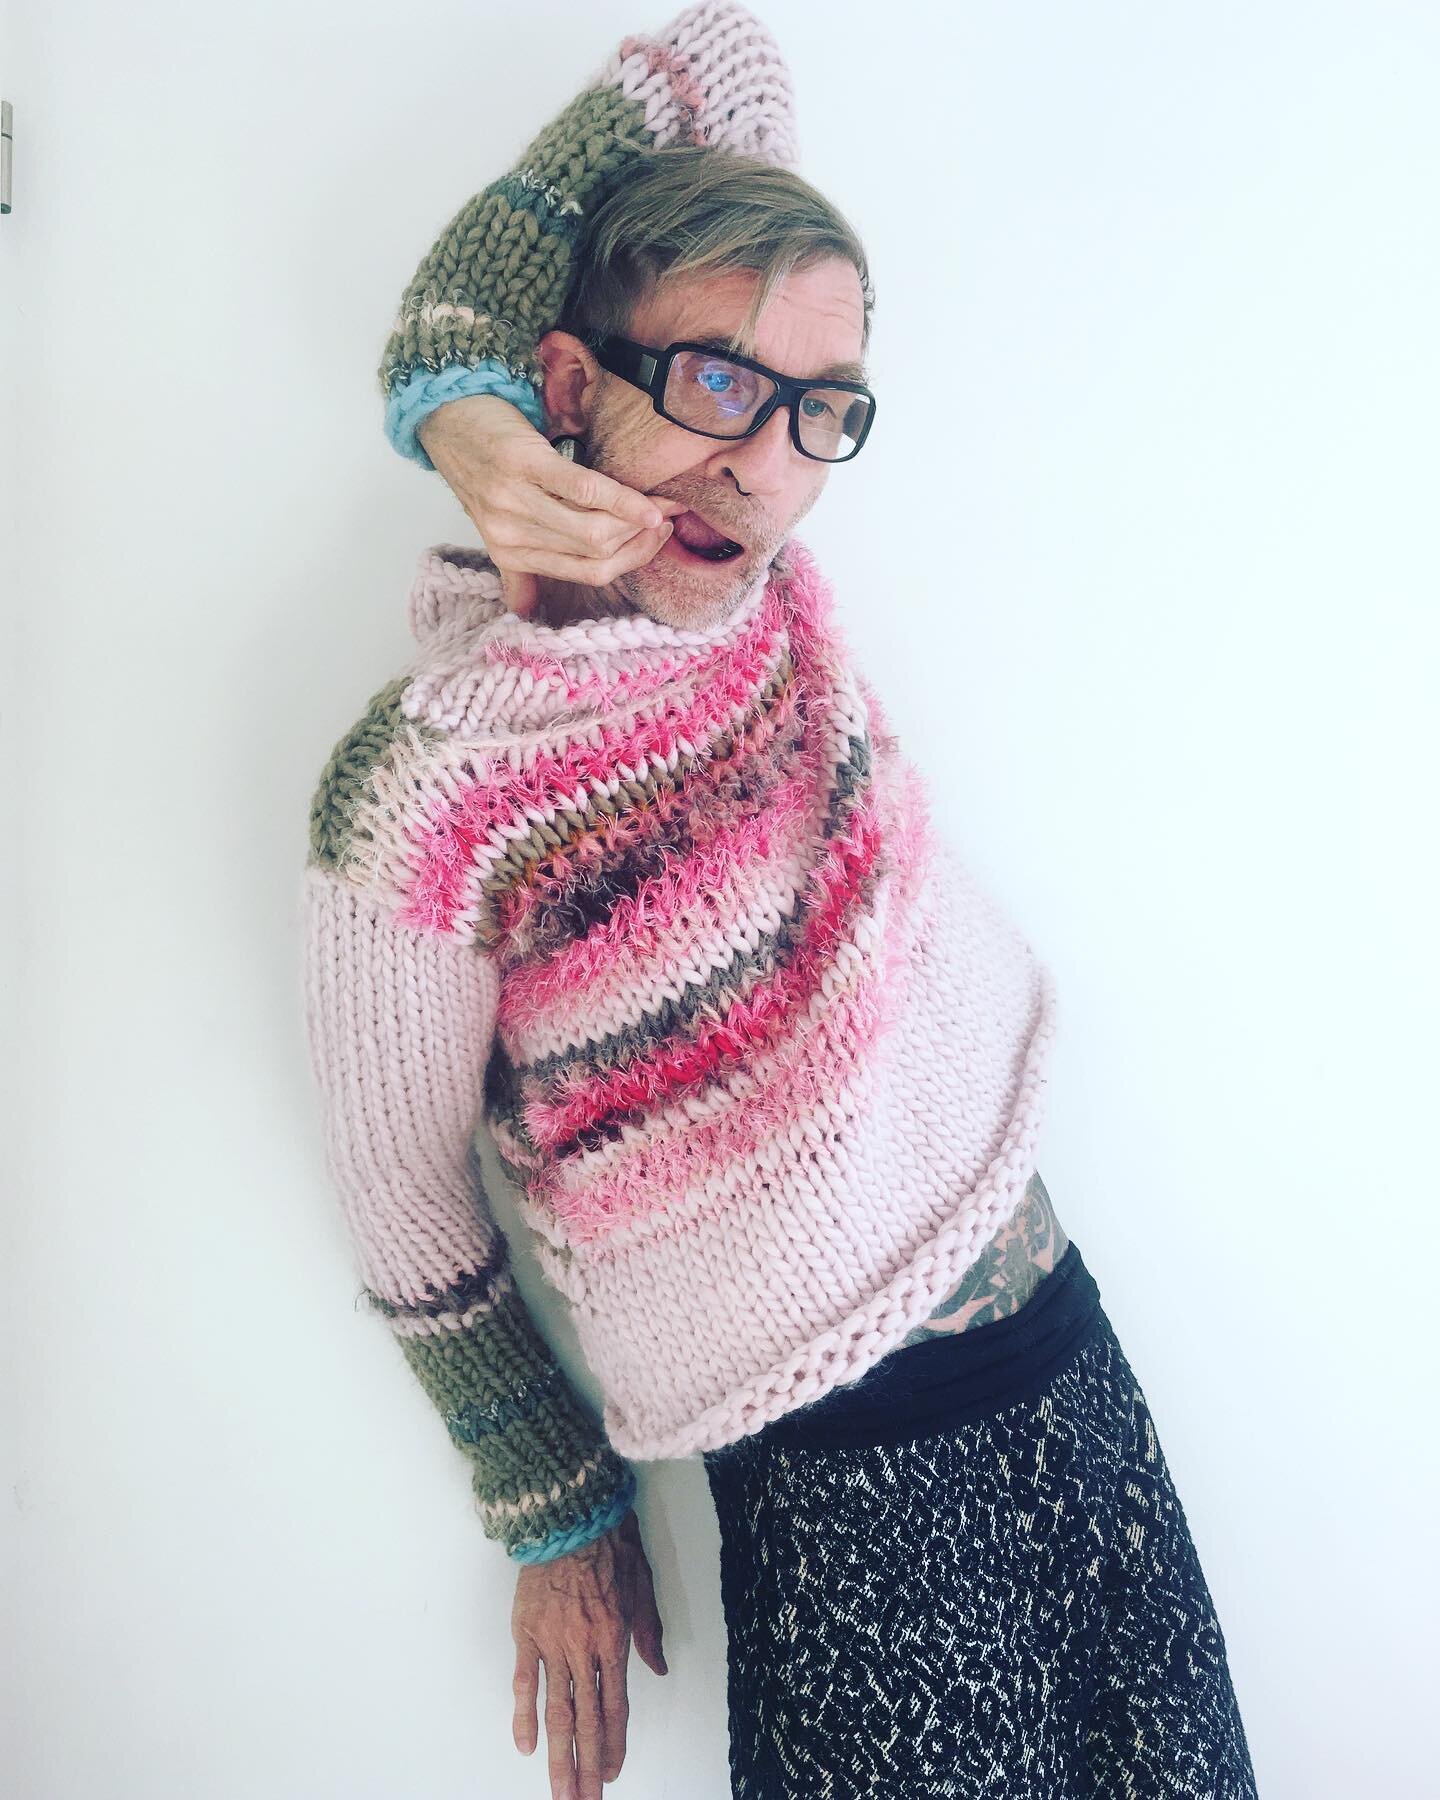 reading lips #knit #knitting #knittinglove #knittinginstagram #knittingguy #colorful #pink #colorstudy #strikeapose #readmylips #queer #queerfashion #beaman #malefashion #gender #grrrr #fckgenderroles #growingupshy #gay #gayguy #queerartist #portrait